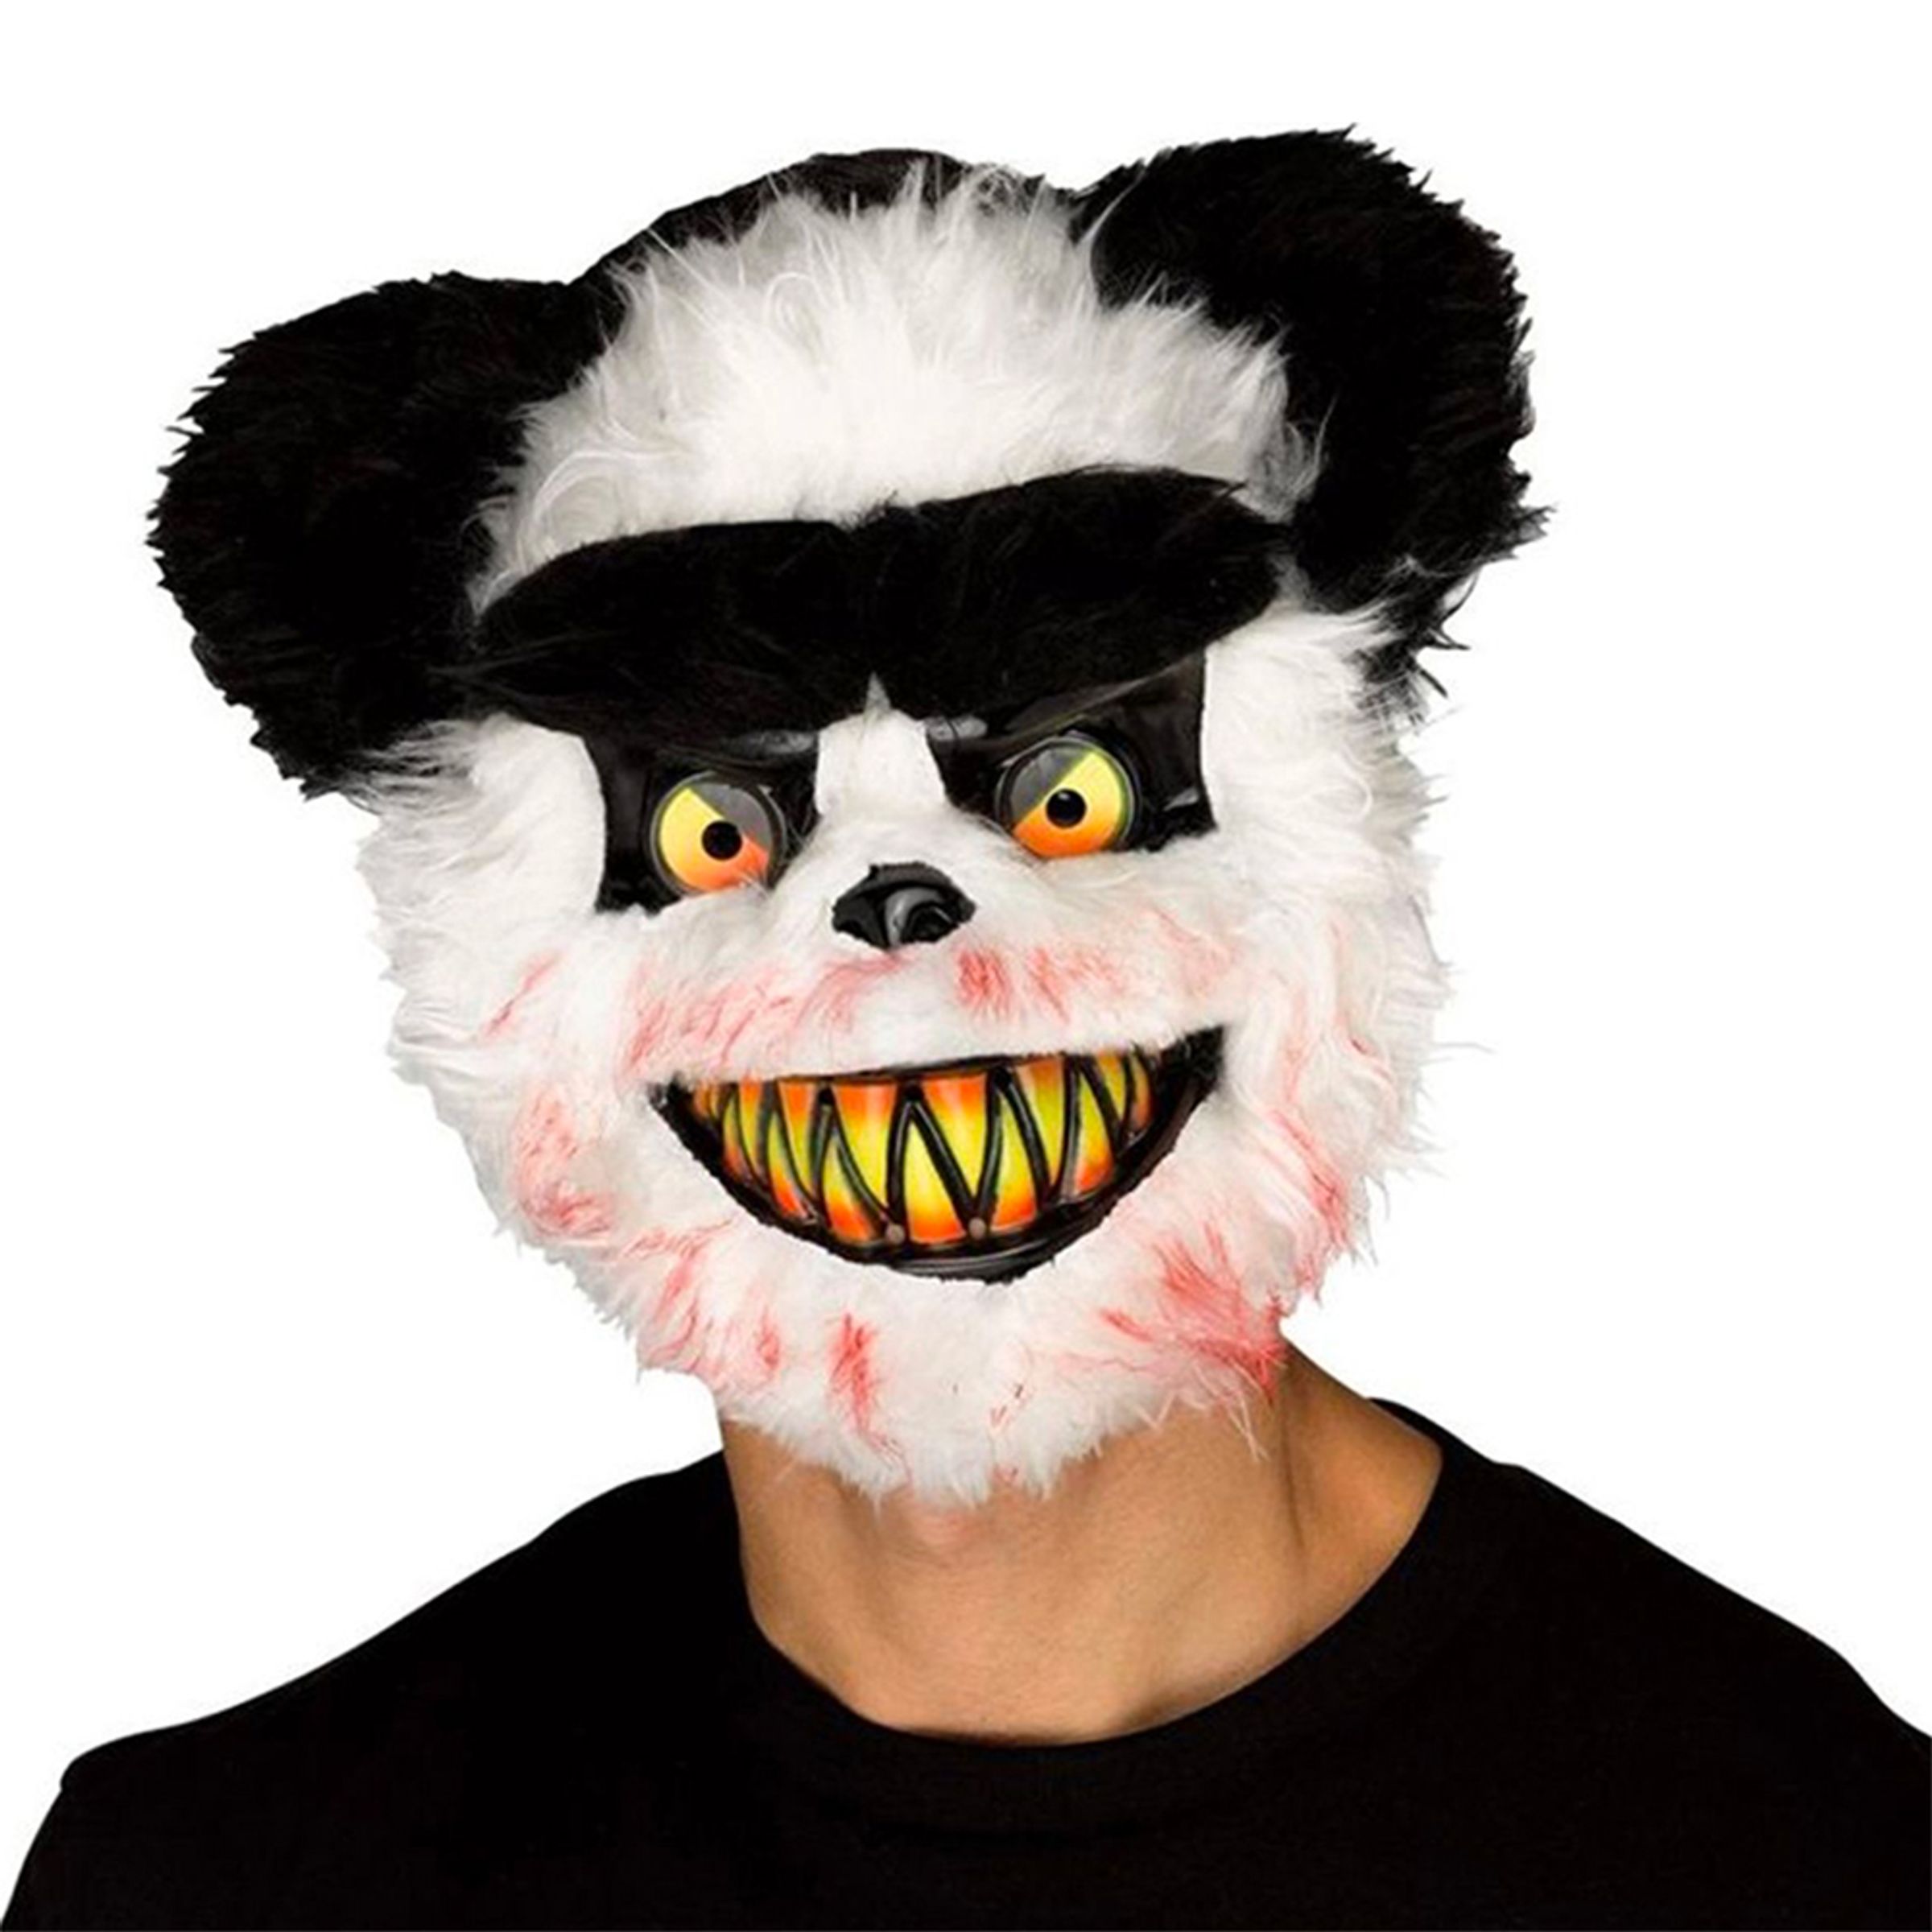 Killer Panda Mask - One size